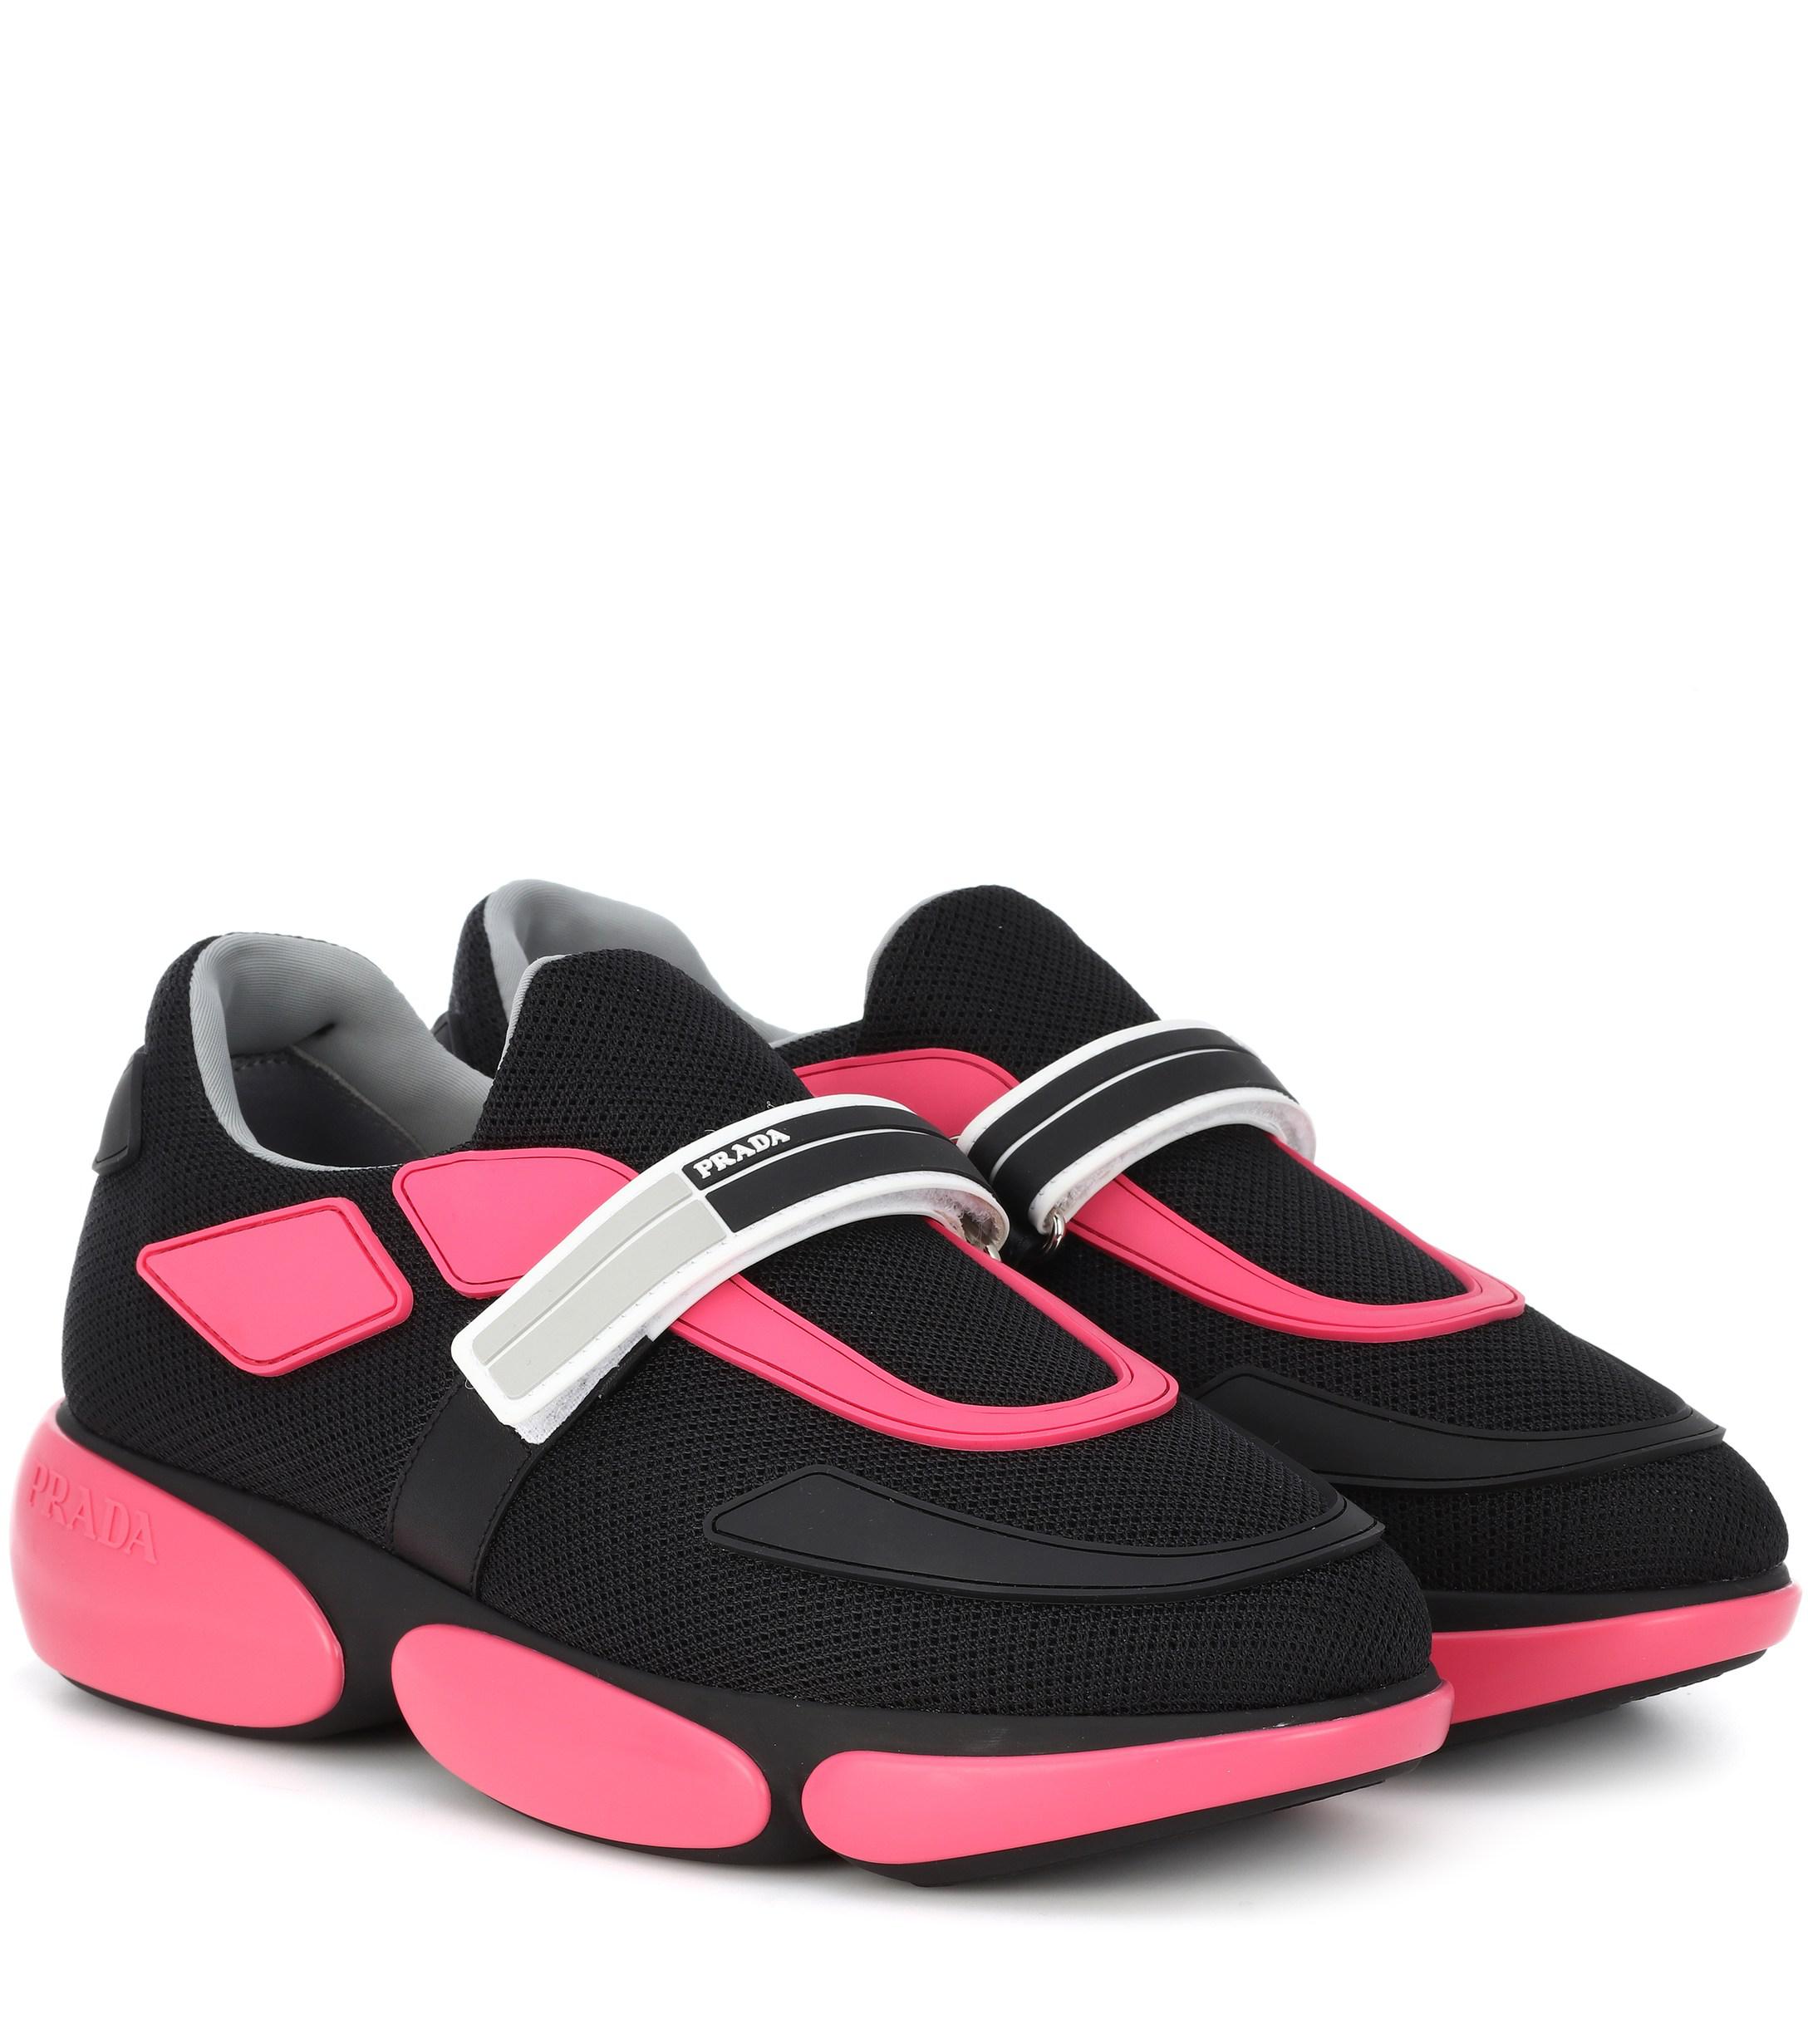 Prada Cloudbust Fabric Sneakers in Pink - Lyst